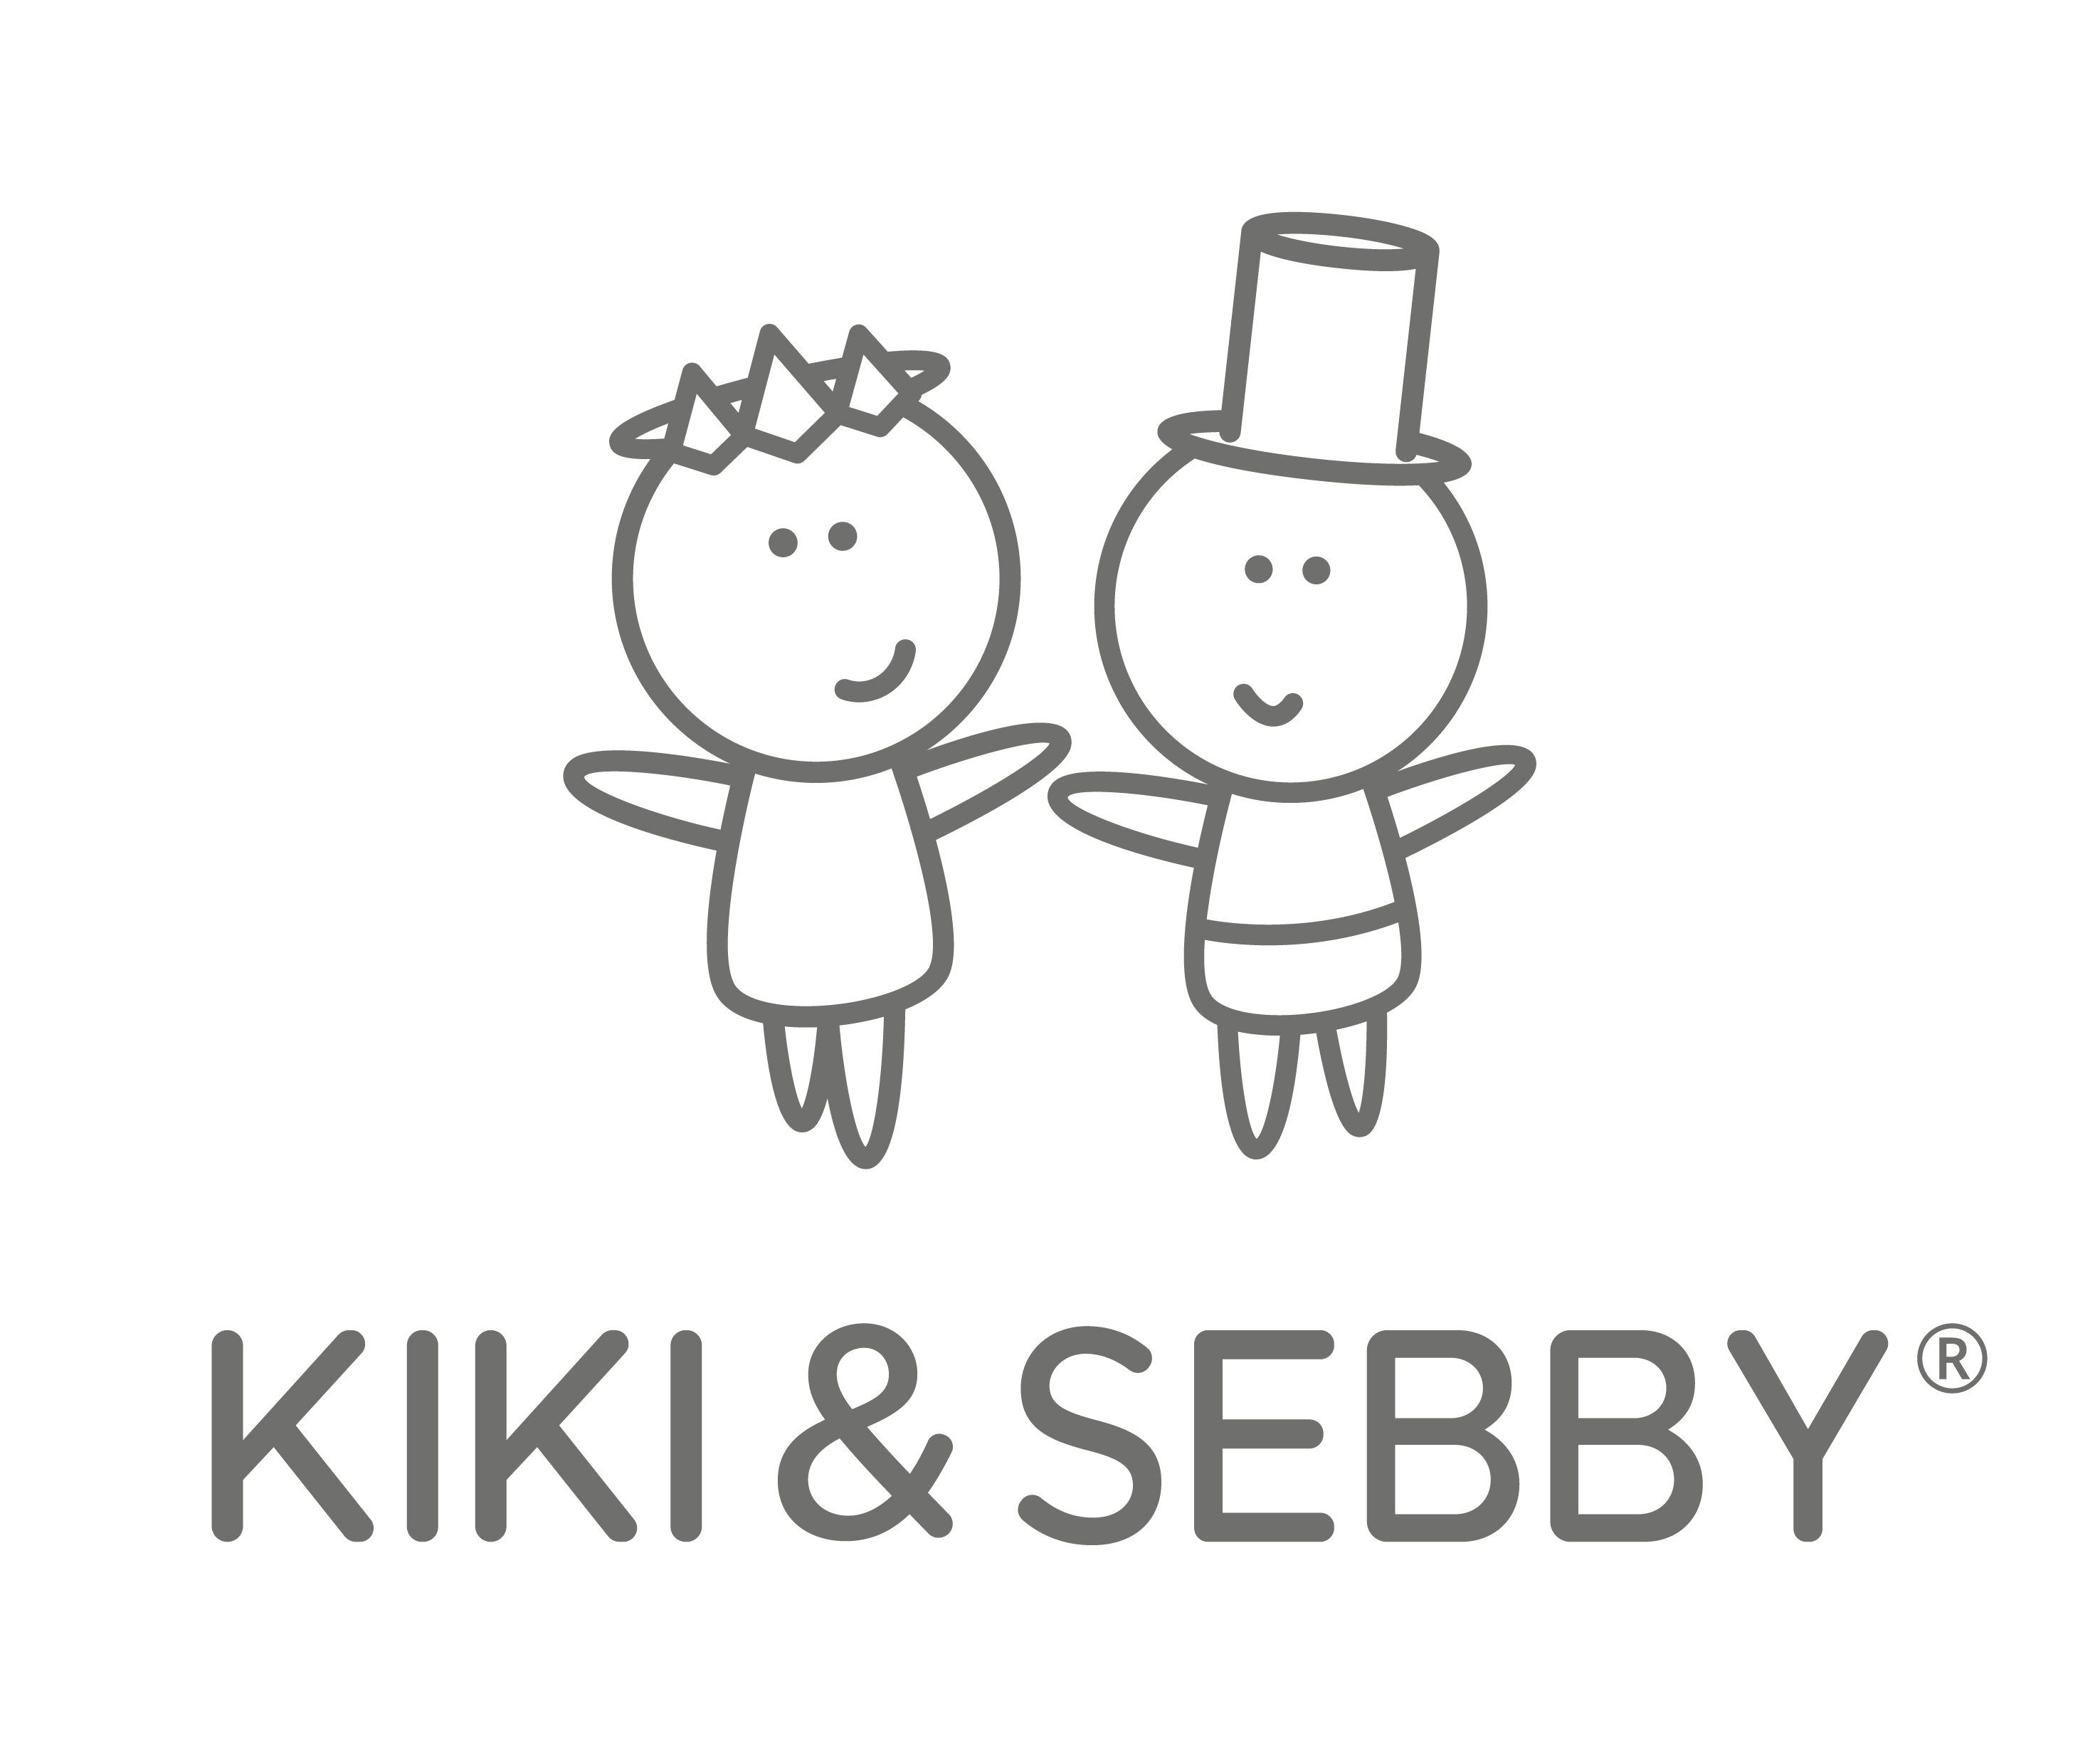 Welcome to the new Kiki & Sebby website